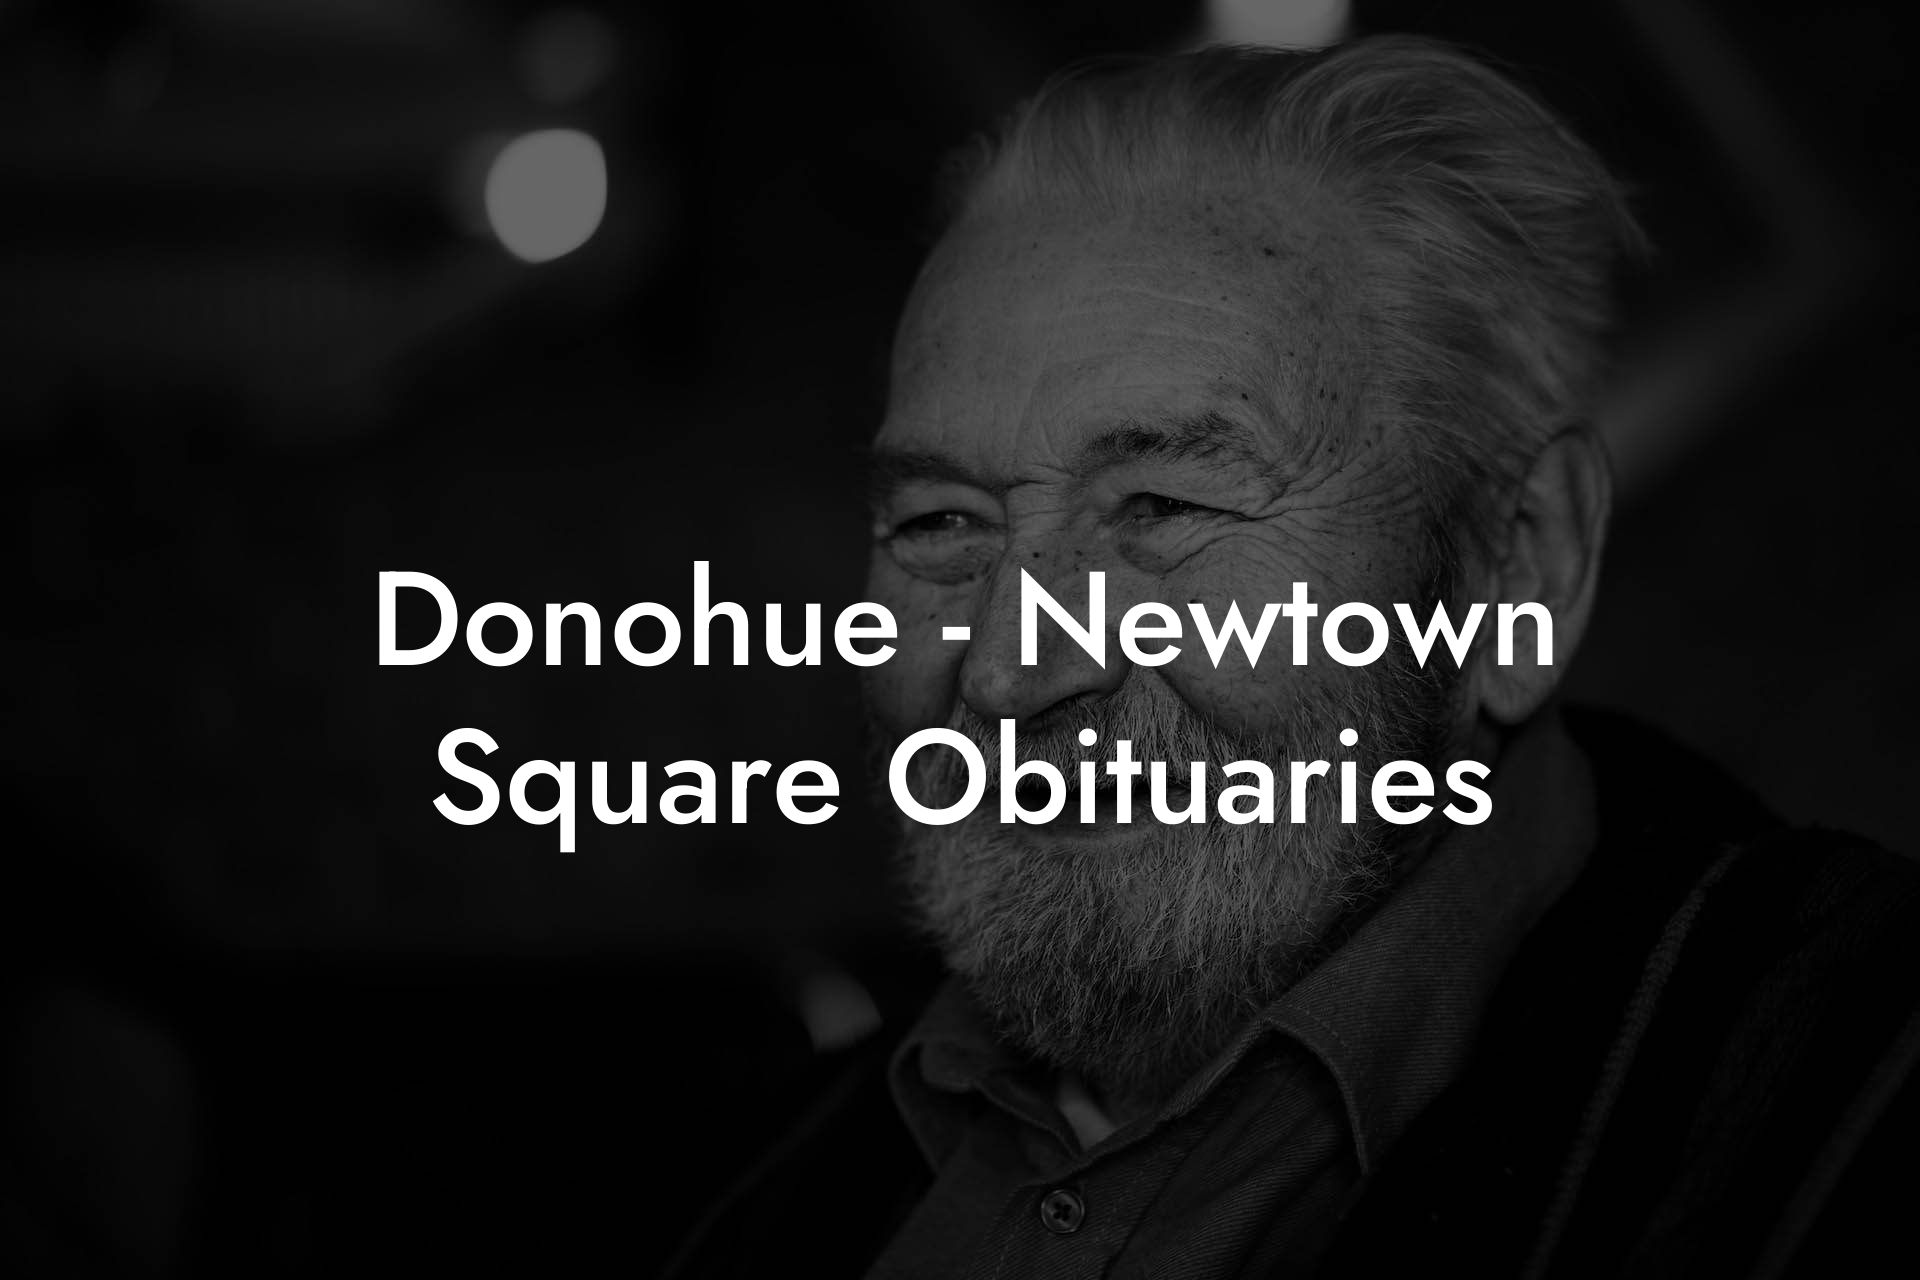 Donohue - Newtown Square Obituaries